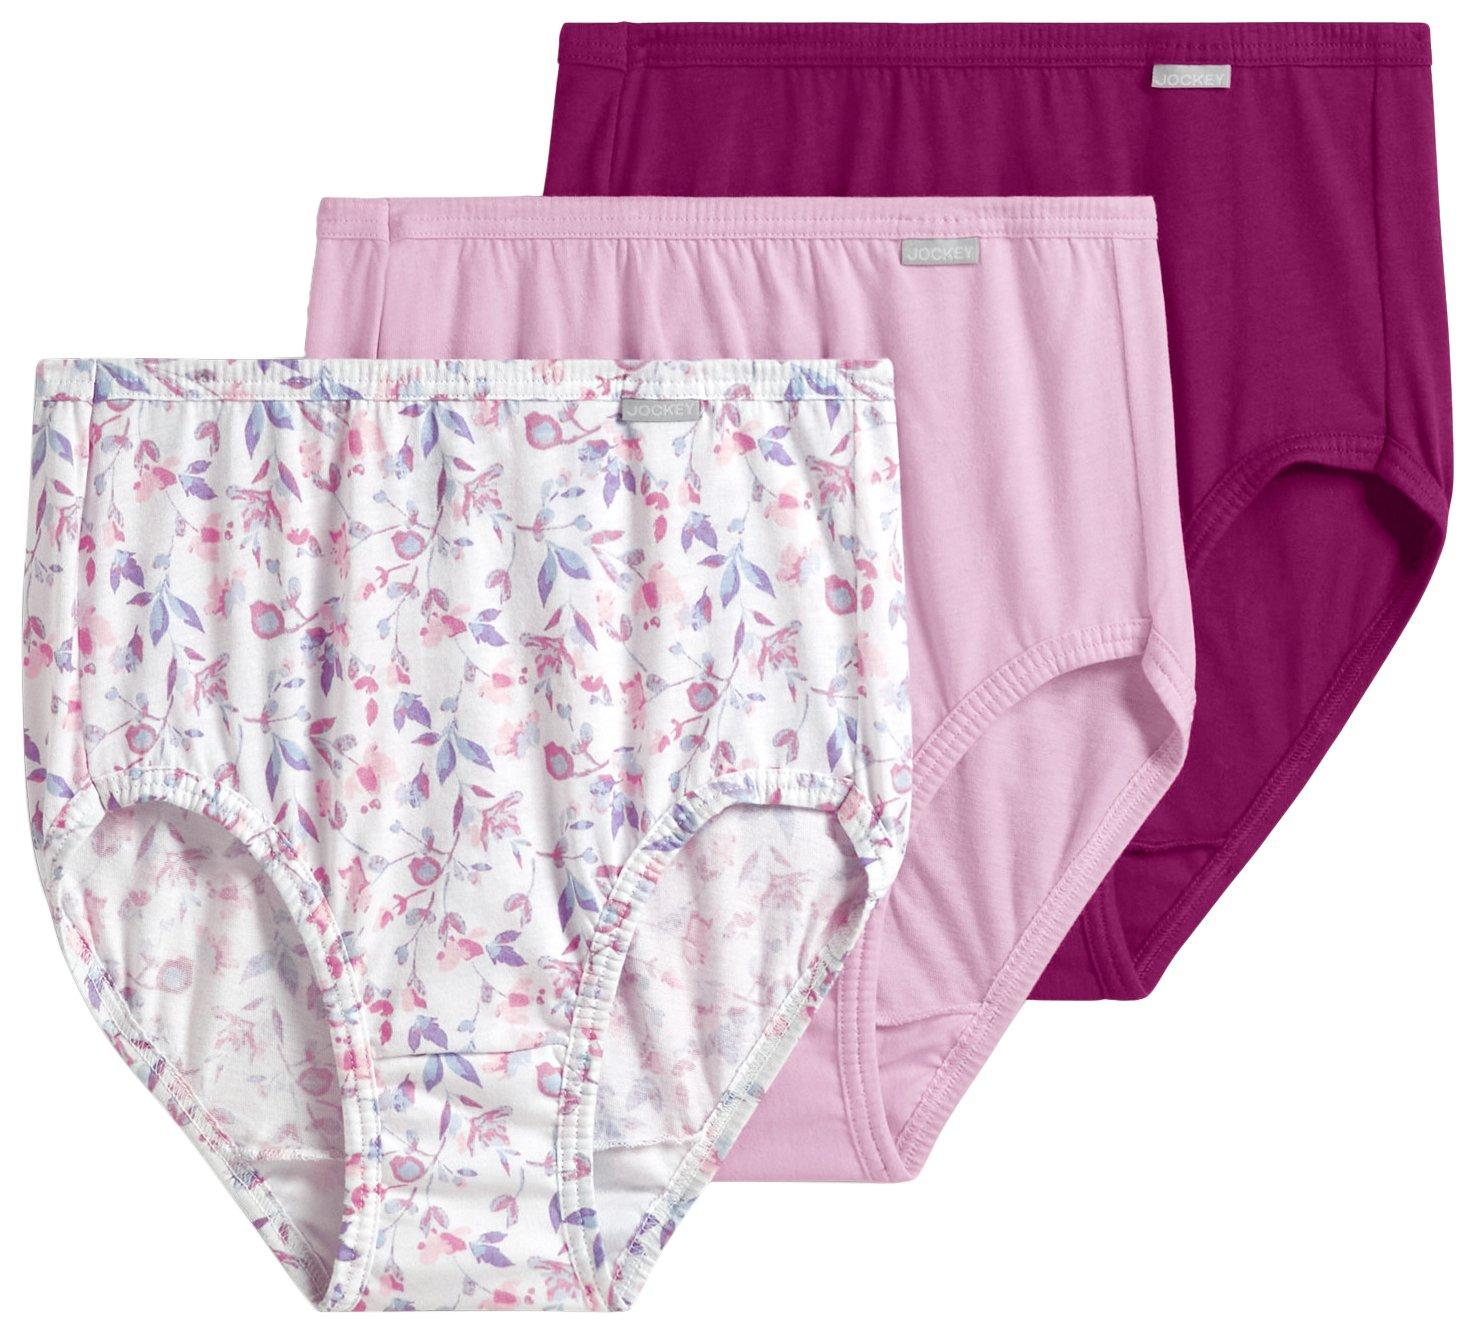 Jockey Elance Cotton French Cut Underwear 3-pk 1541, Extended Sizes in  Purple